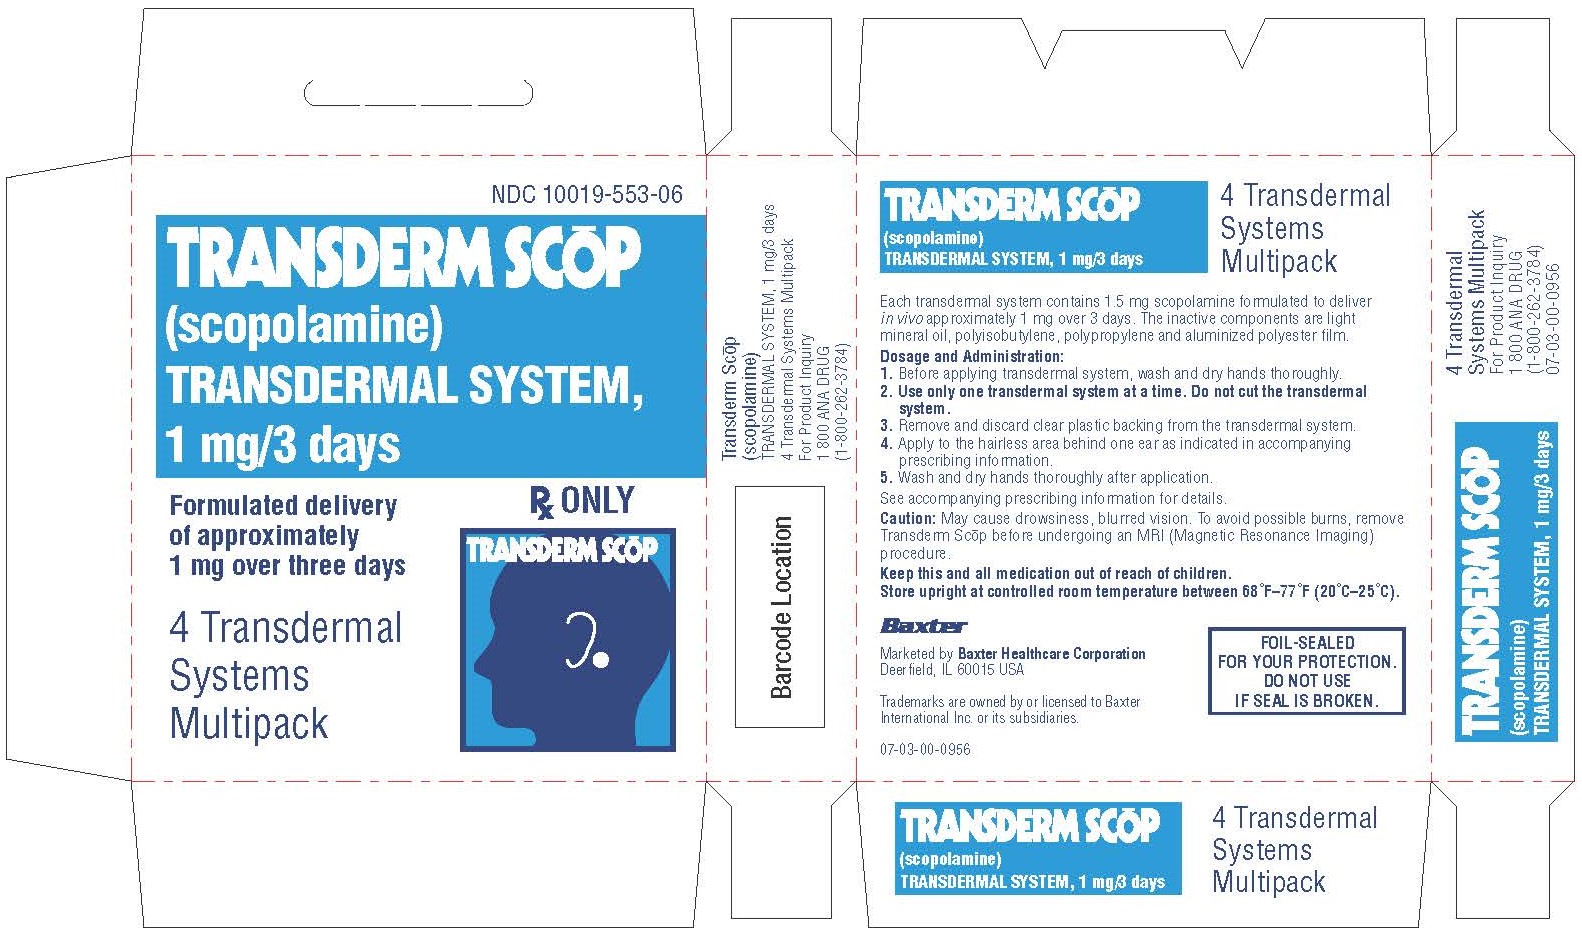 Transderm Scop Carton Label 10019-553-06.jpg